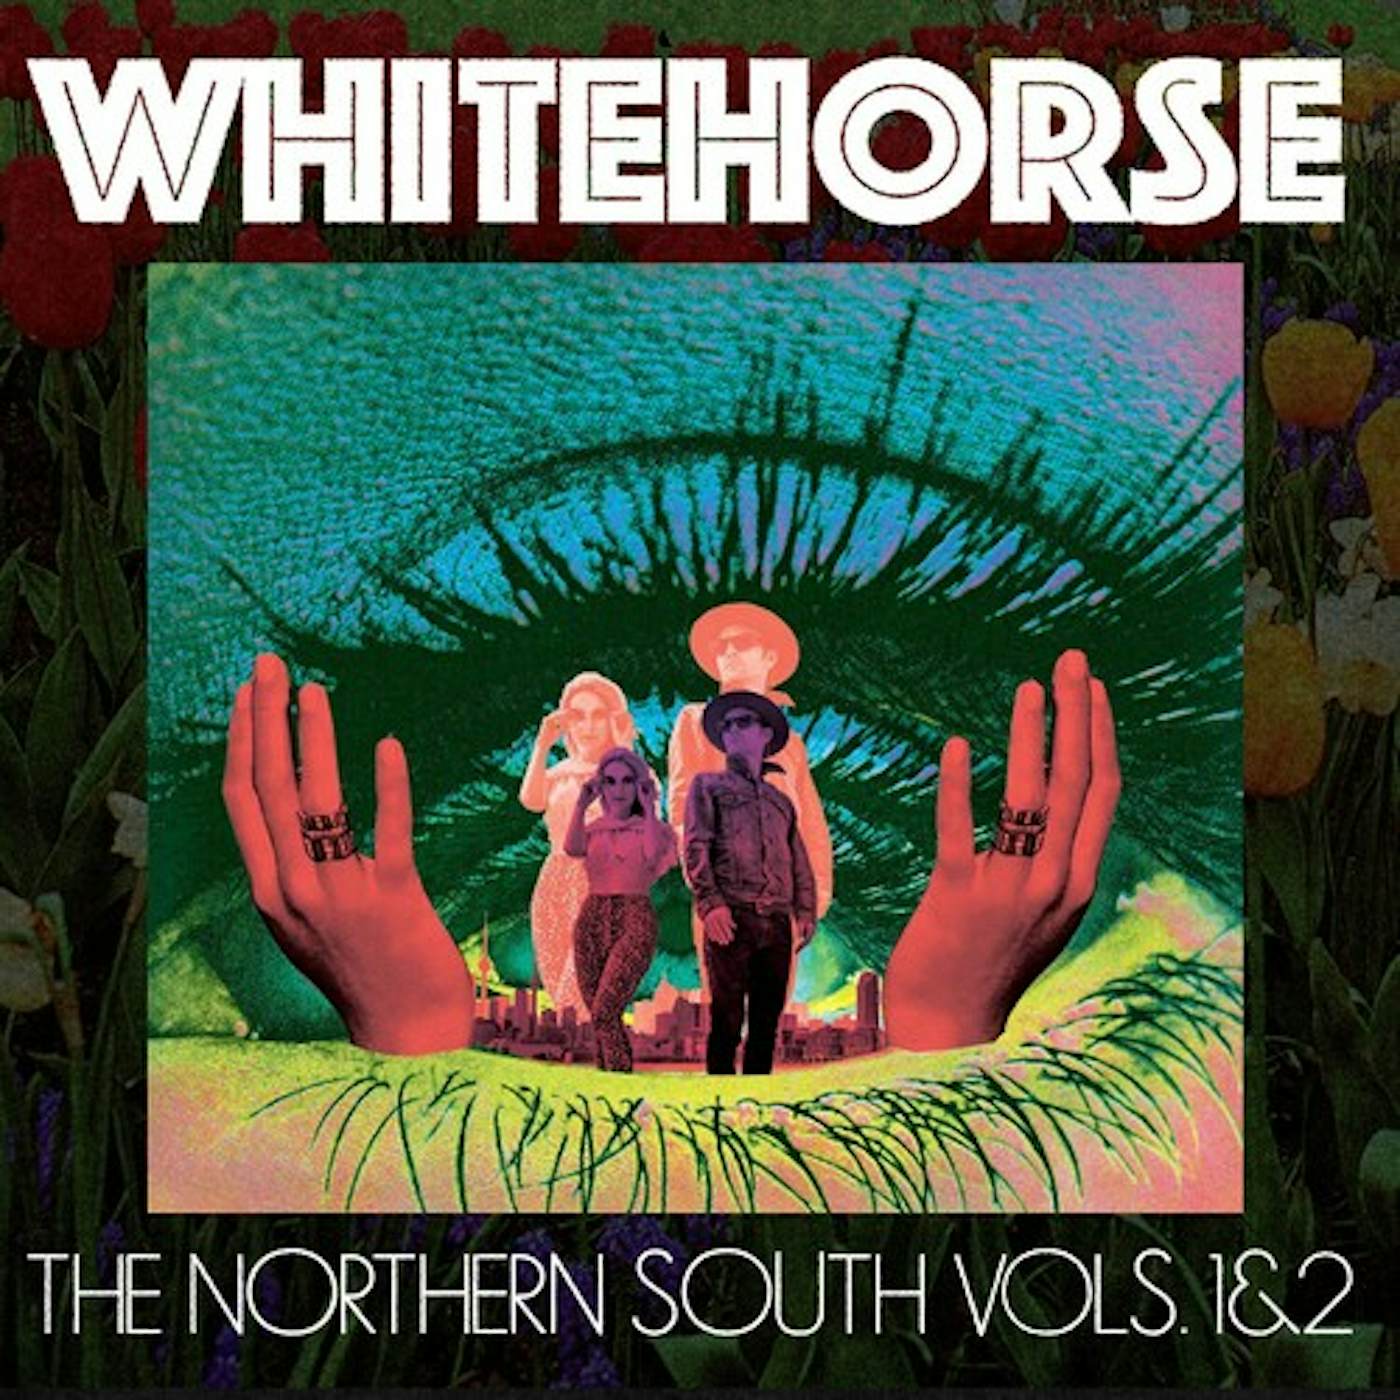 Whitehorse NORTHERN SOUTH VOL. 1 & 2 Vinyl Record